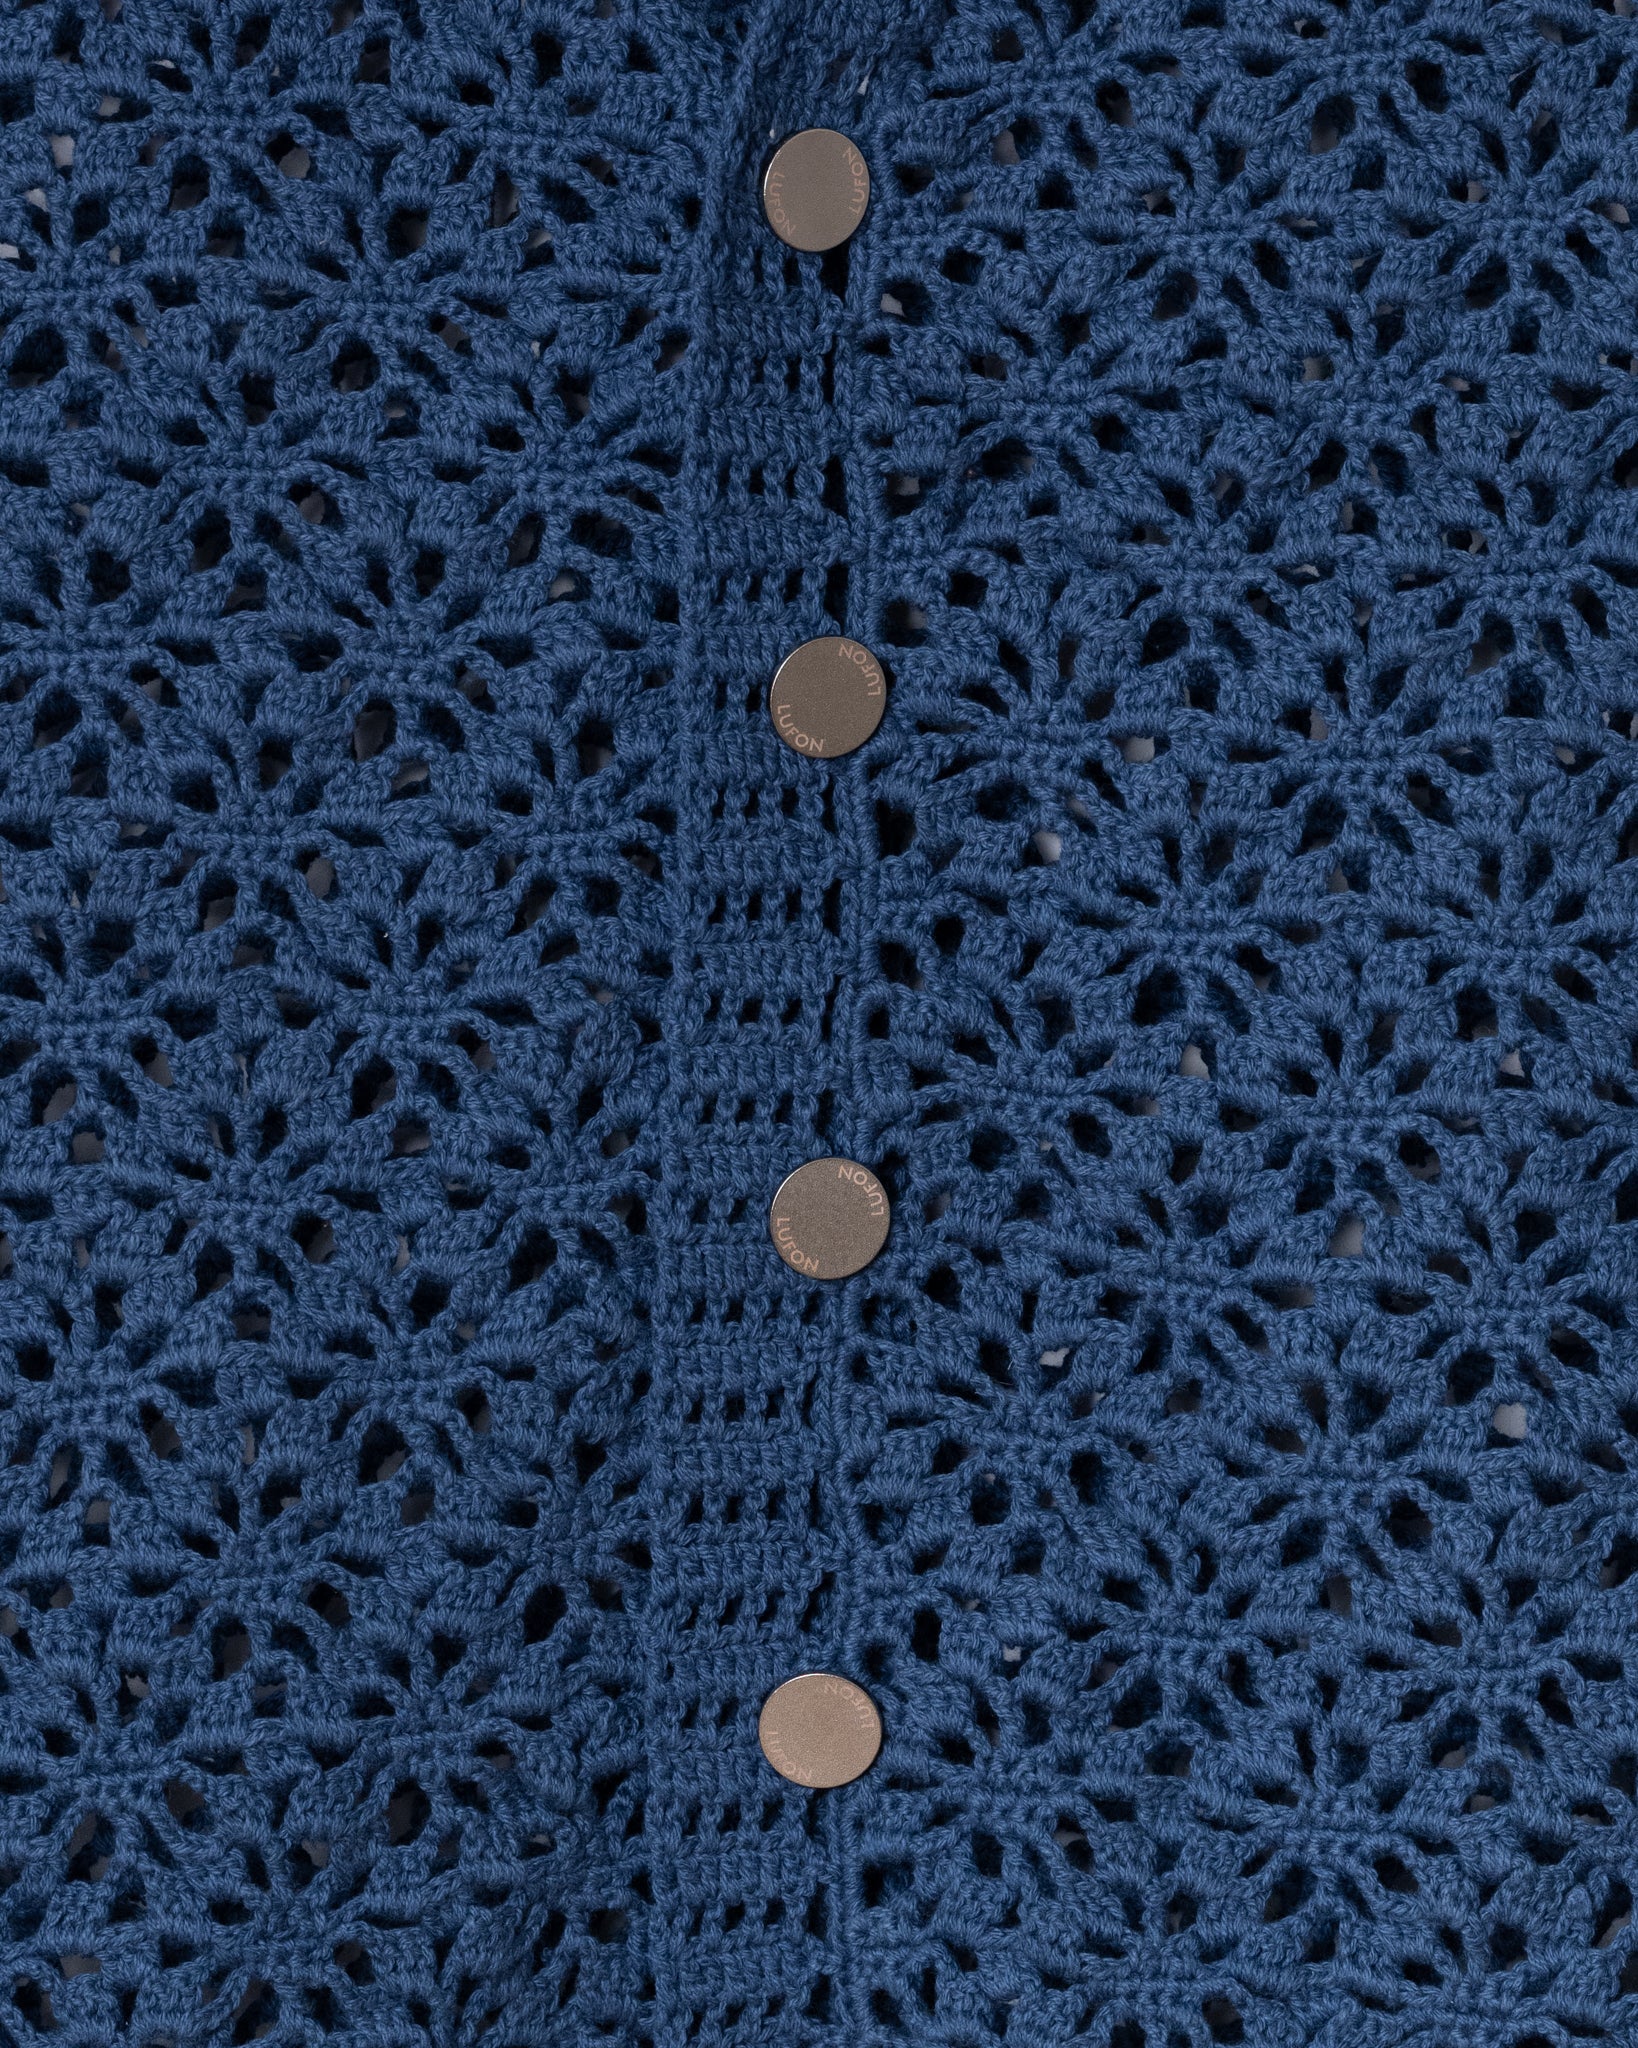 Crochet Hand Knit Cardigan -Preep Blue